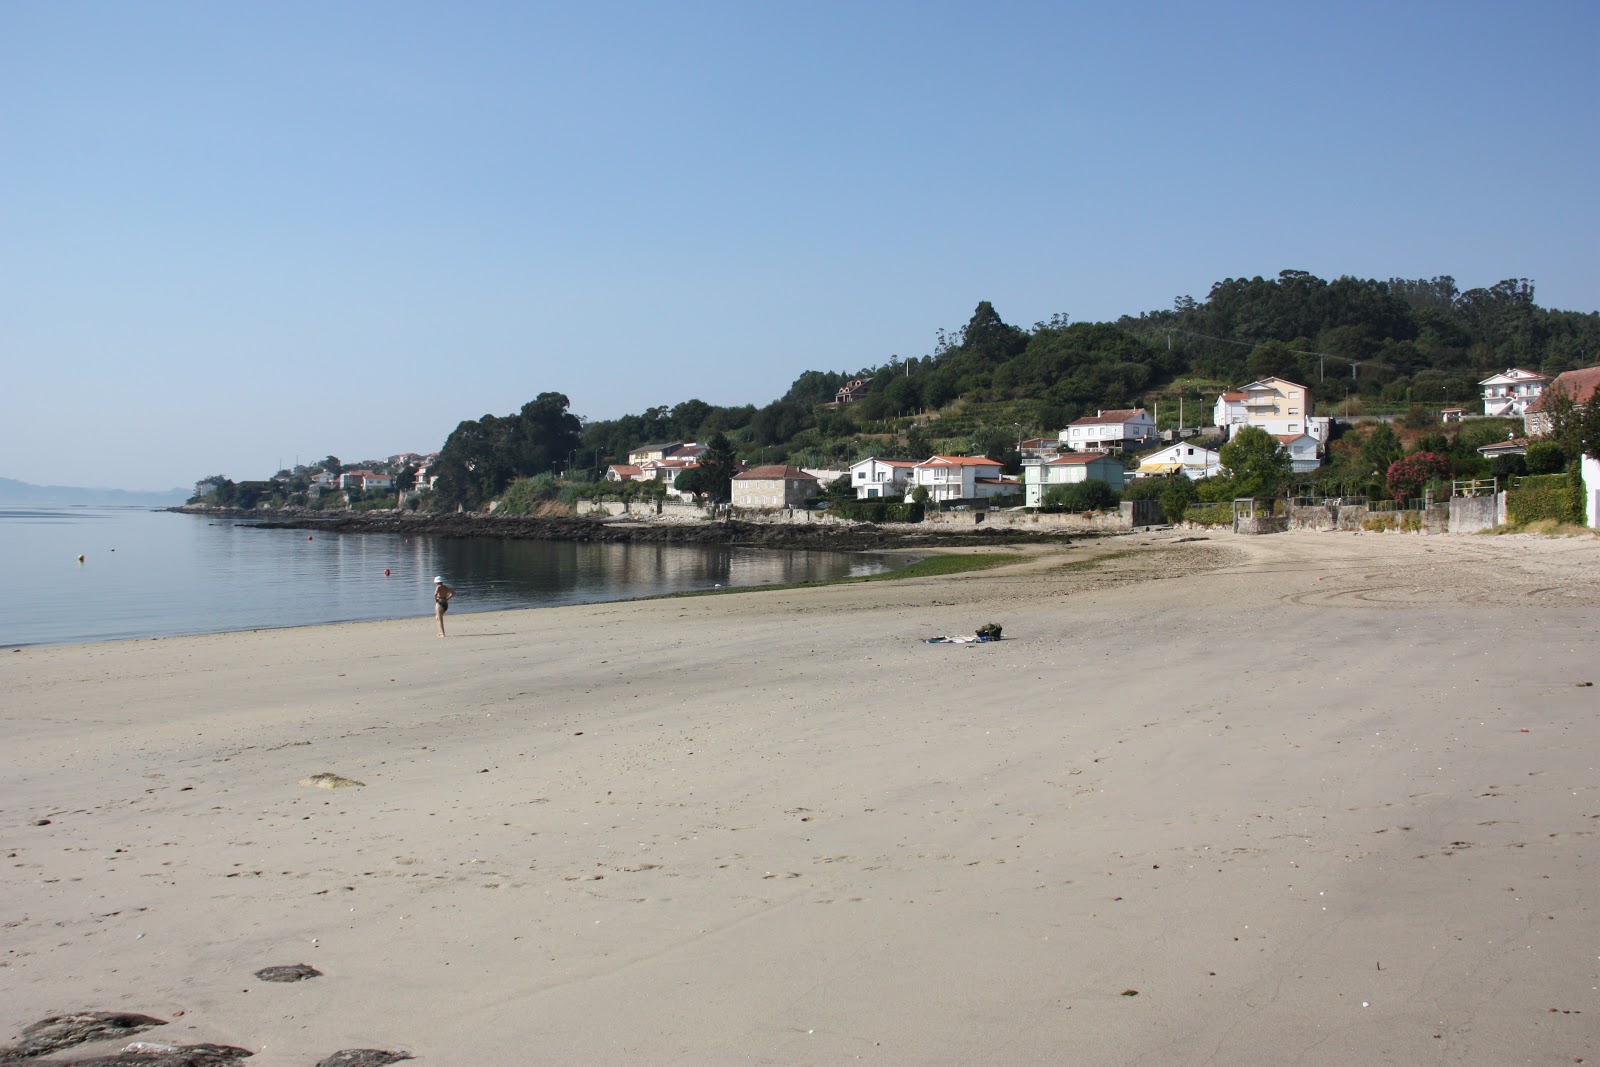 Fotografie cu Praia Samieira cu nivelul de curățenie in medie